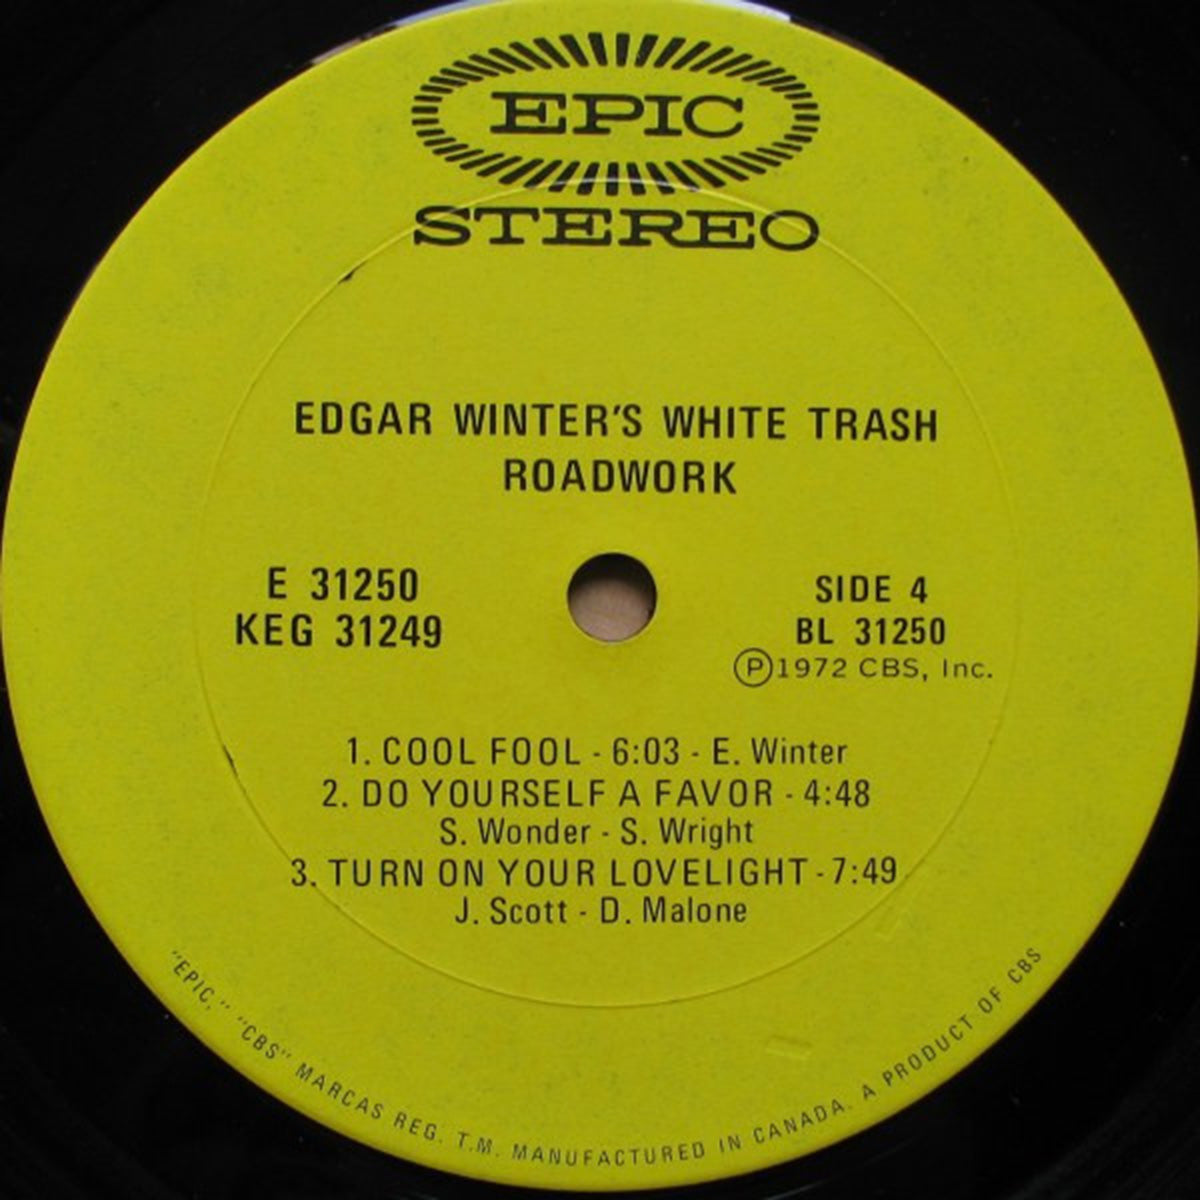 Edgar Winter's White Trash Featuring Jerry LaCroix, Rick Derringer  - 1972